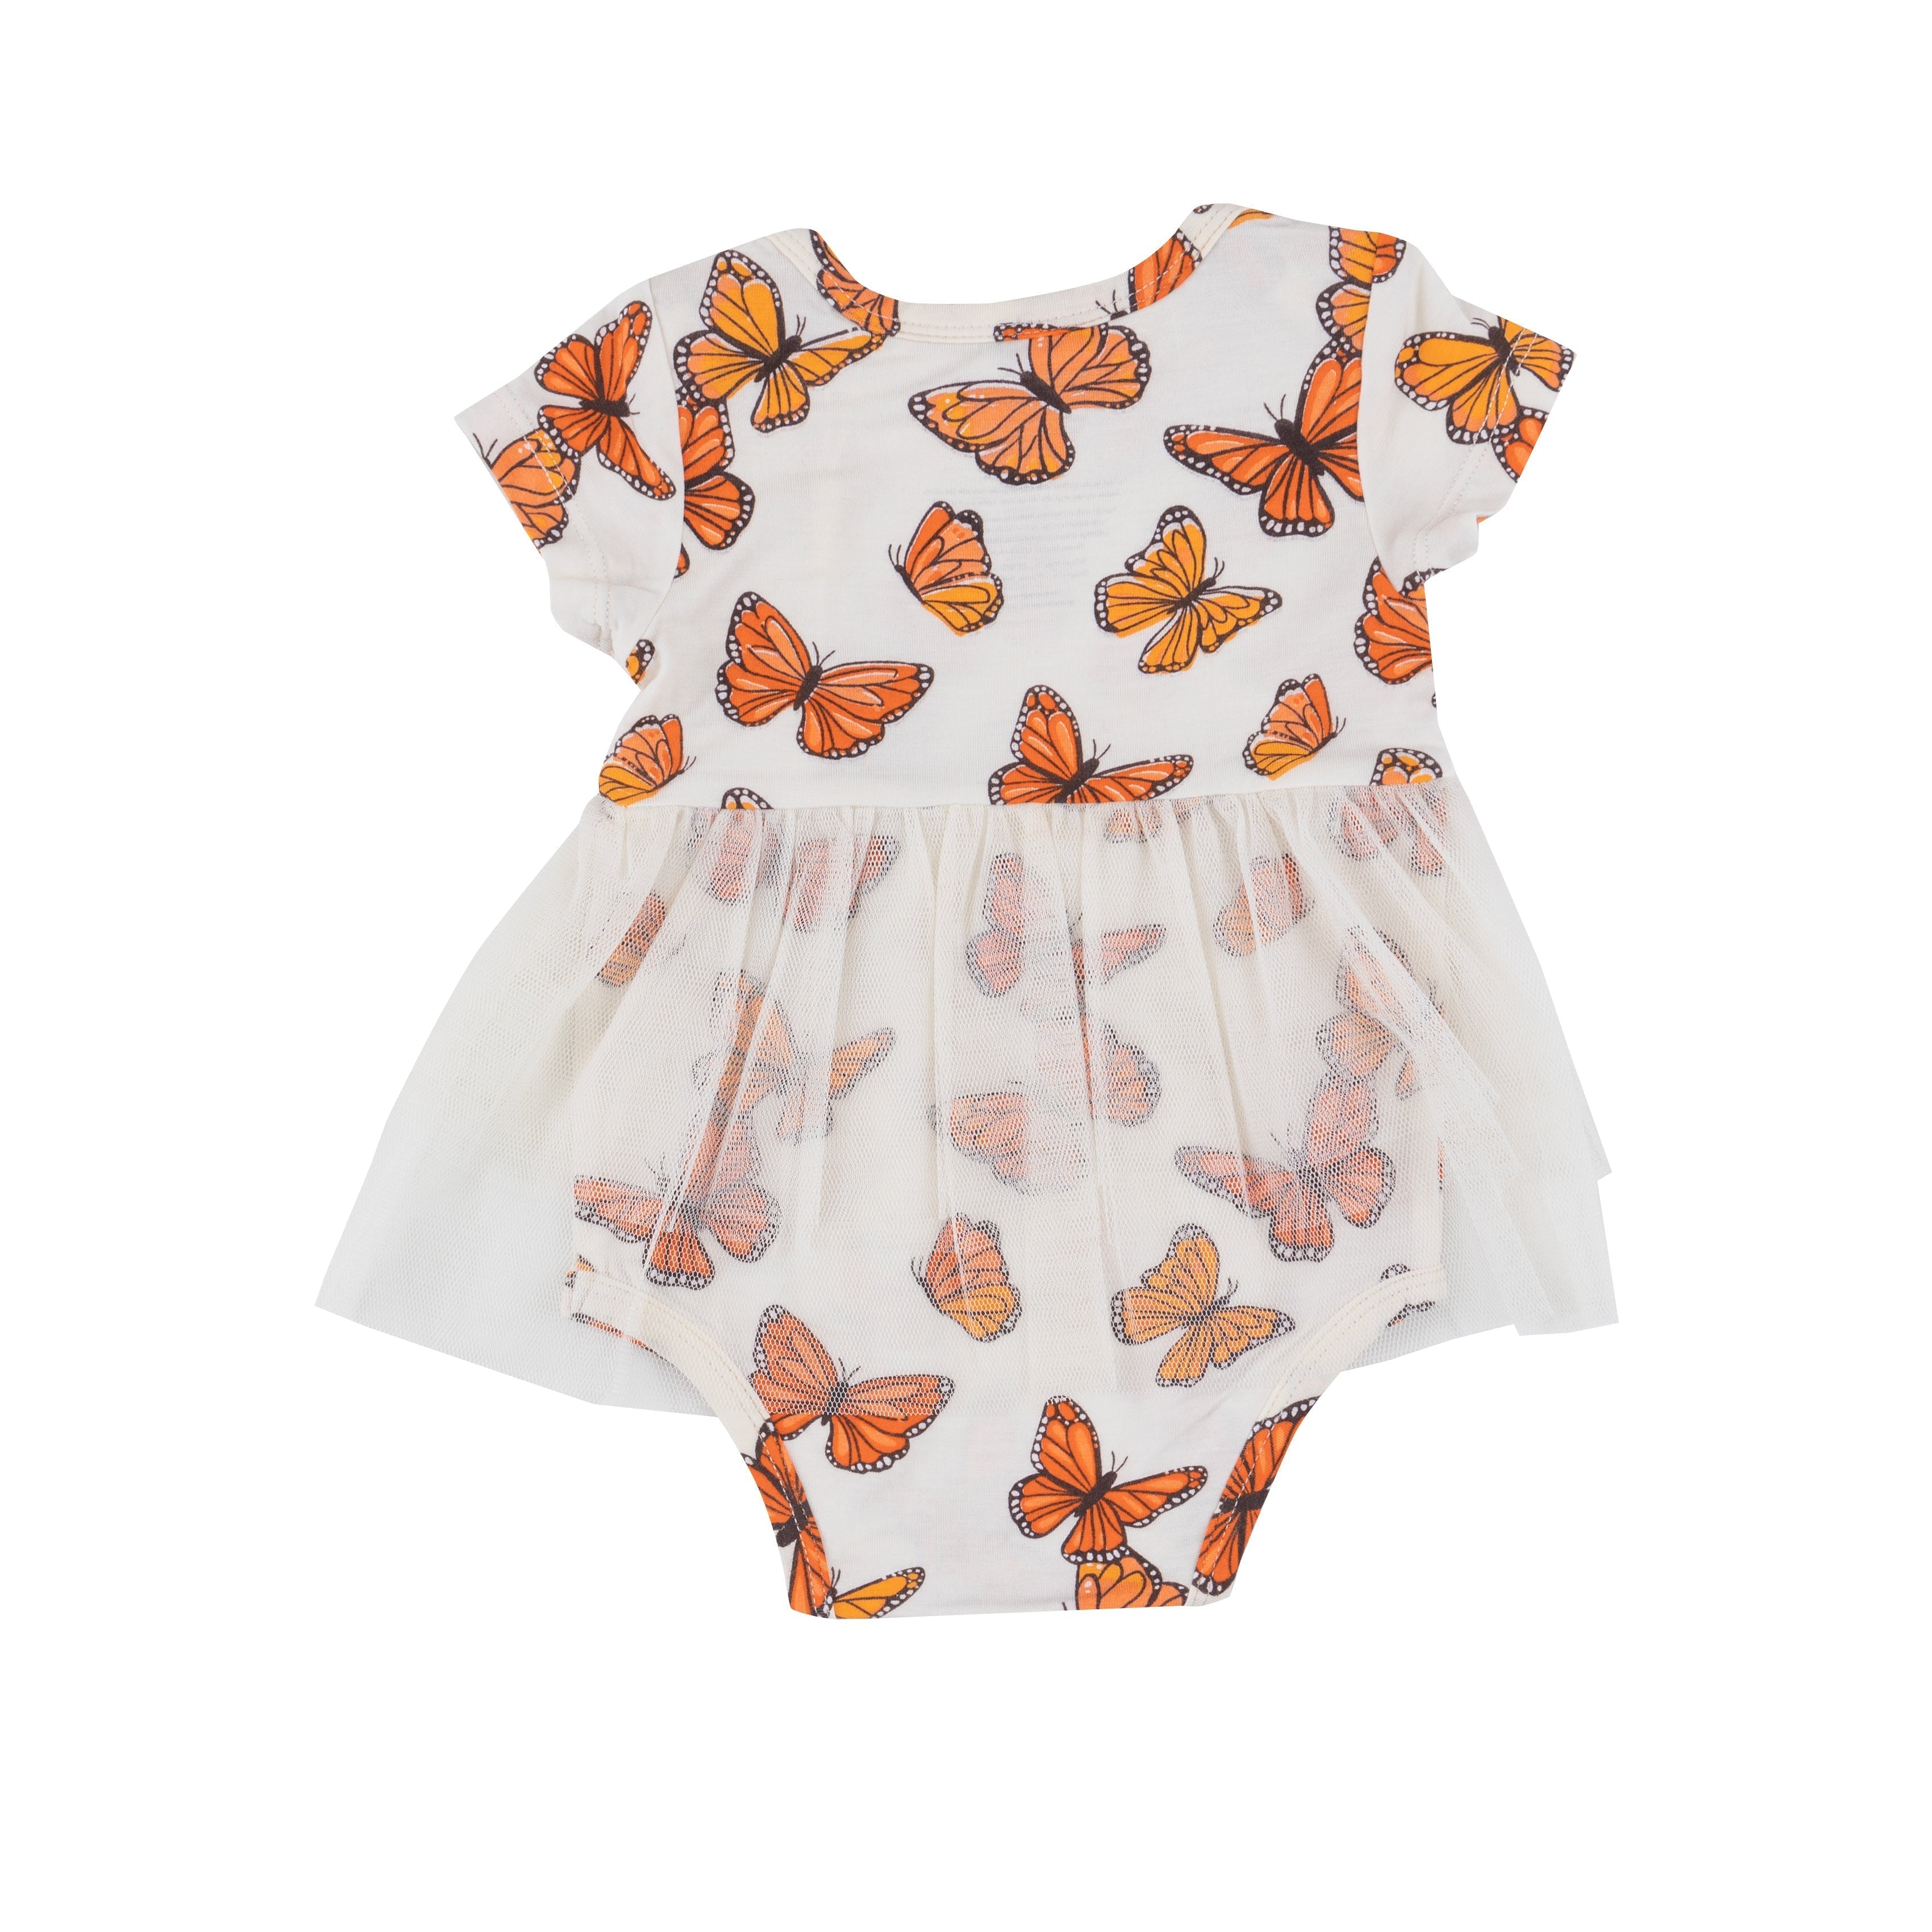 Twirly S/S Tutu Bodysuit Dress - Mariposa Monarca